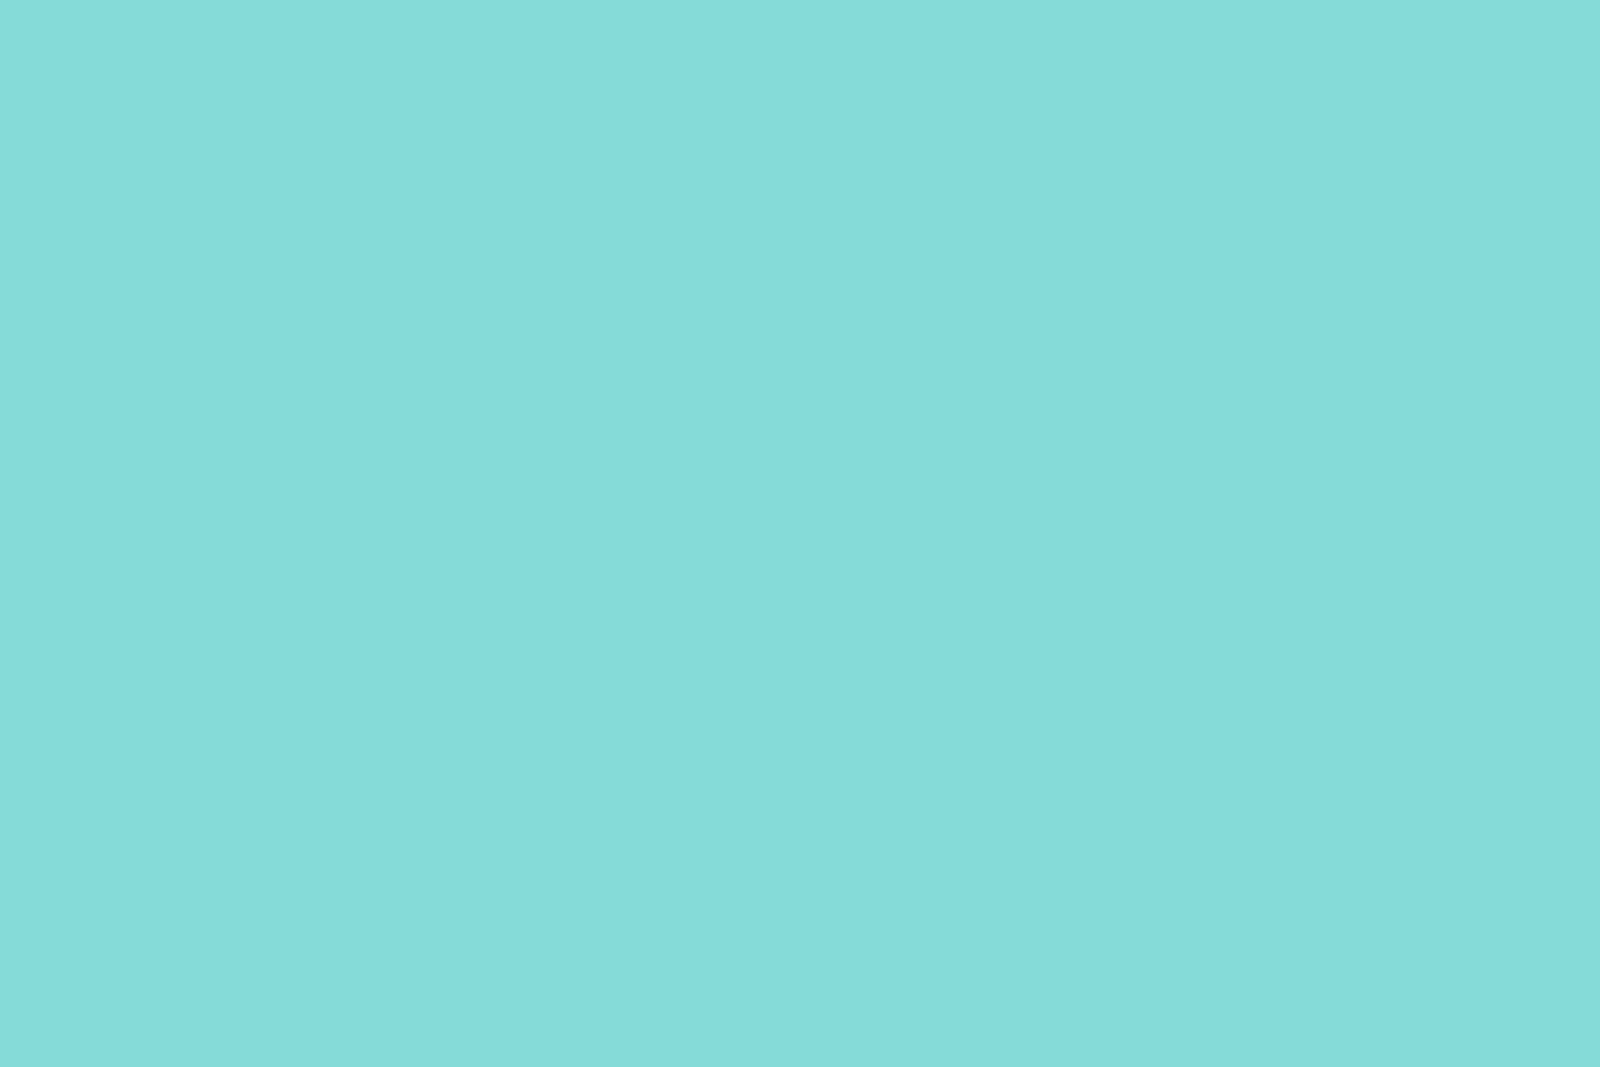  9029 Aruba Blue (nil) 40-0011,   , 30/1, , , 210-230 gr (34/18), 95%  + 5% , /   